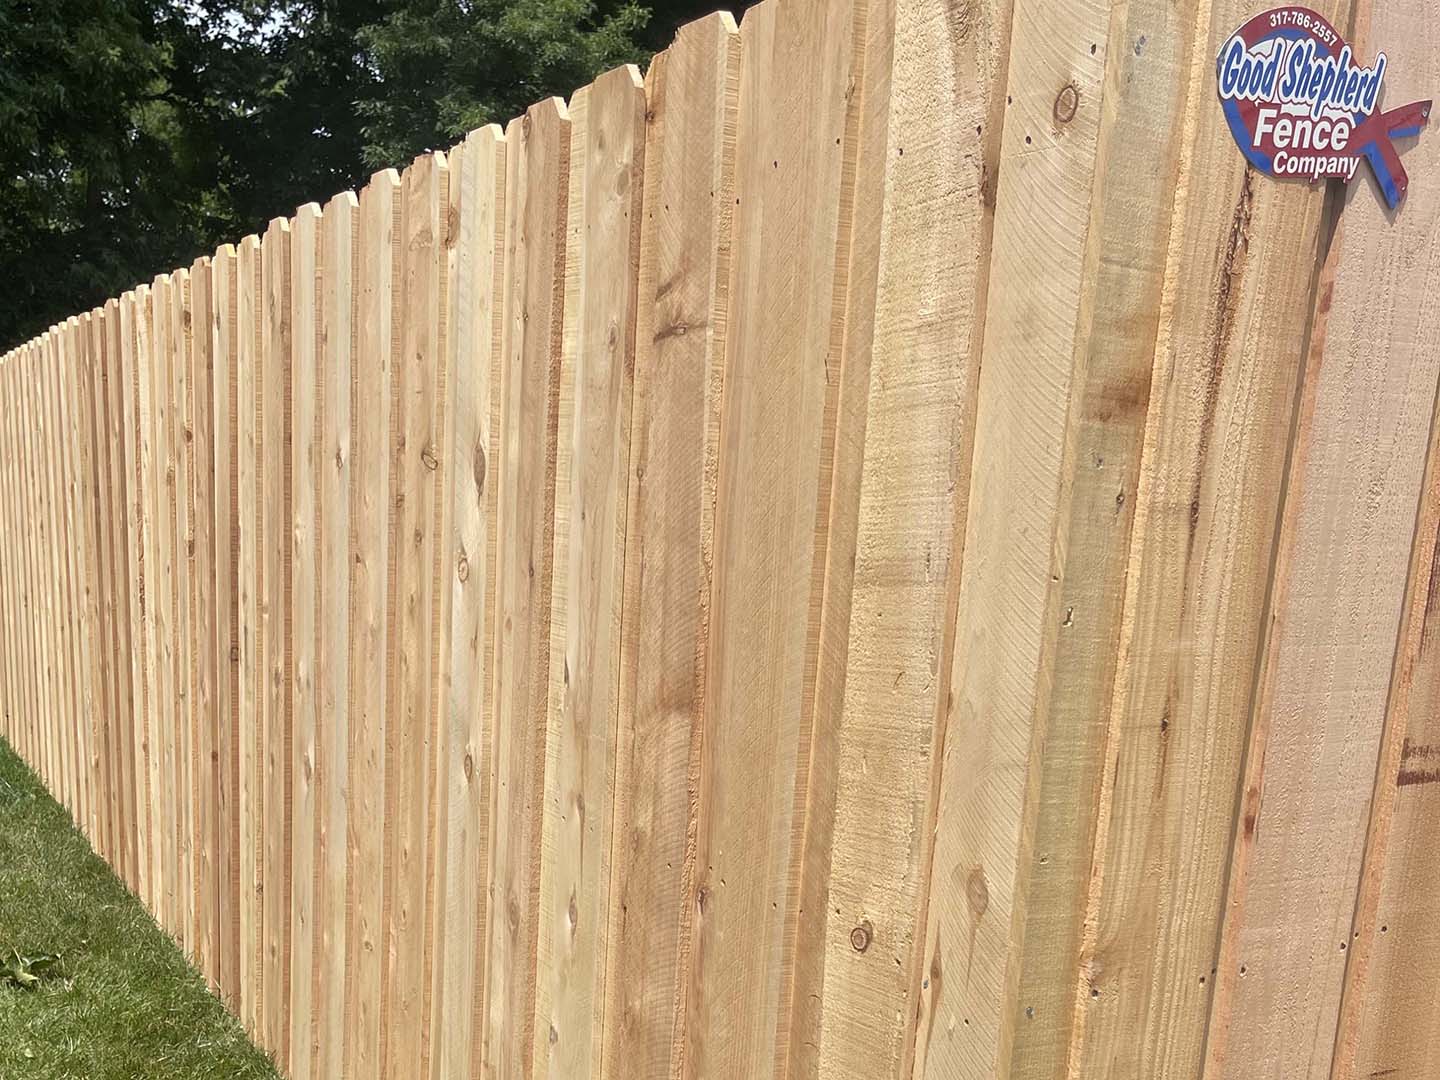 No dig cedar wood fence company in the Indianapolis Indiana area